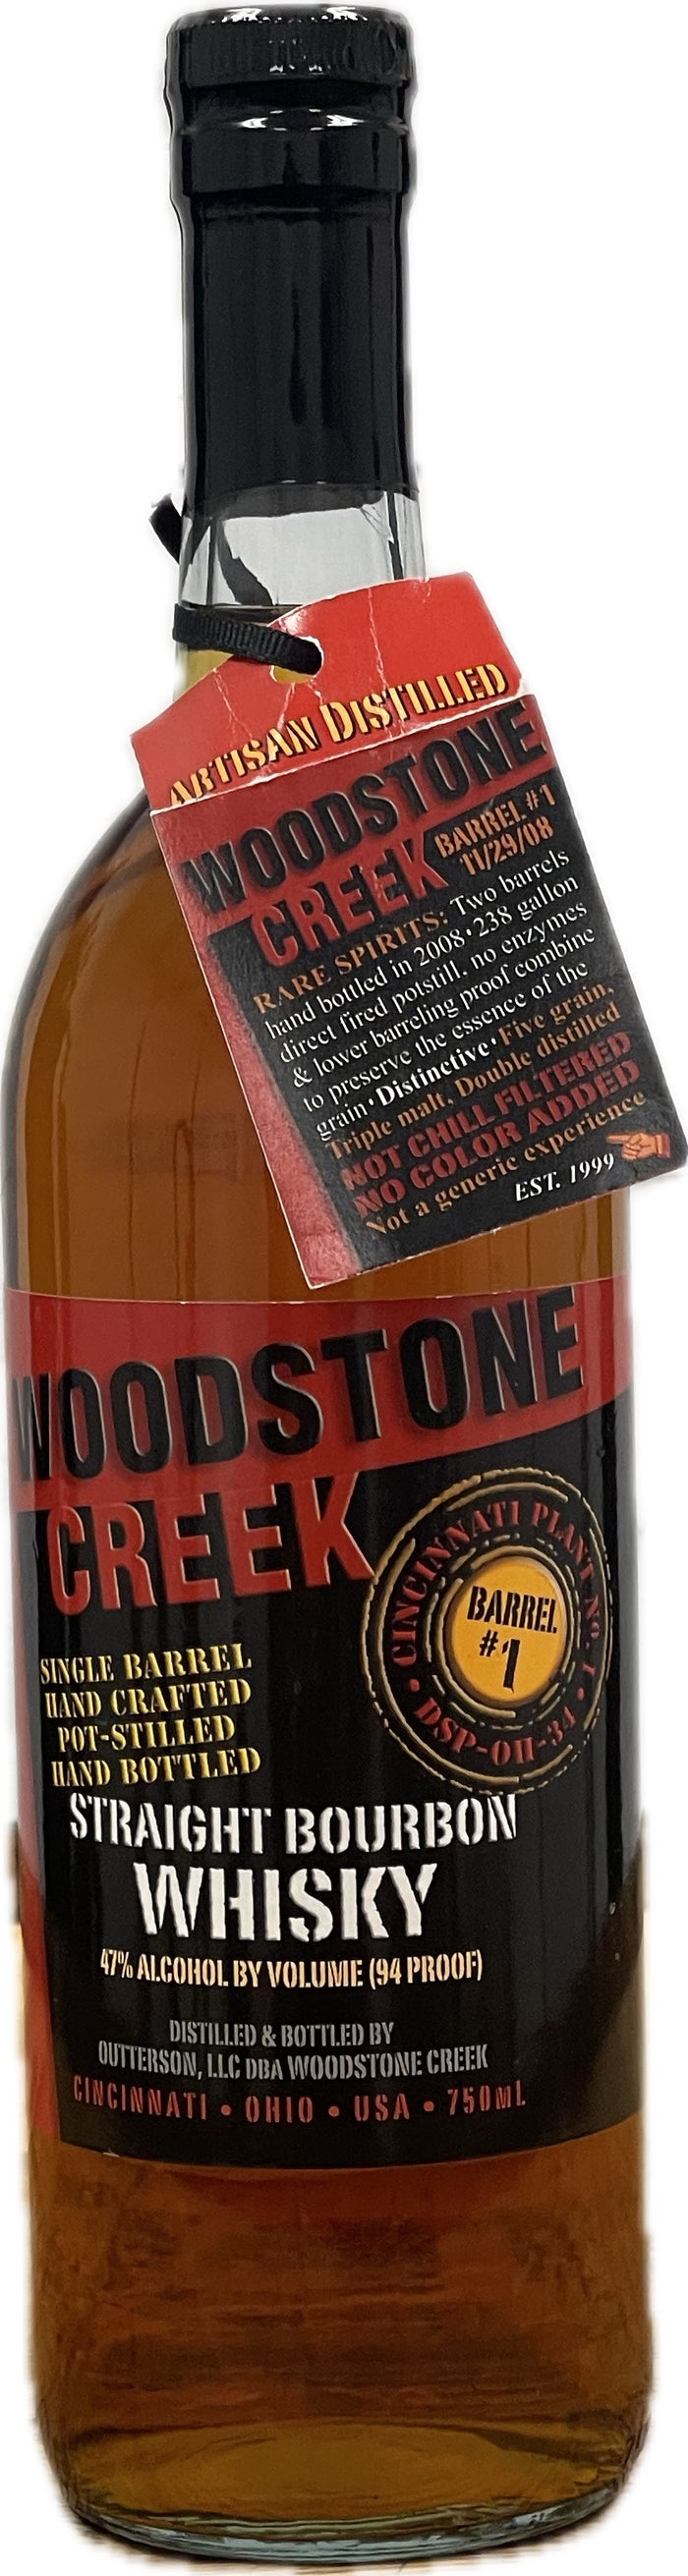 Woodstone Creek Straight Bourbon Barrel #1 Whiskey